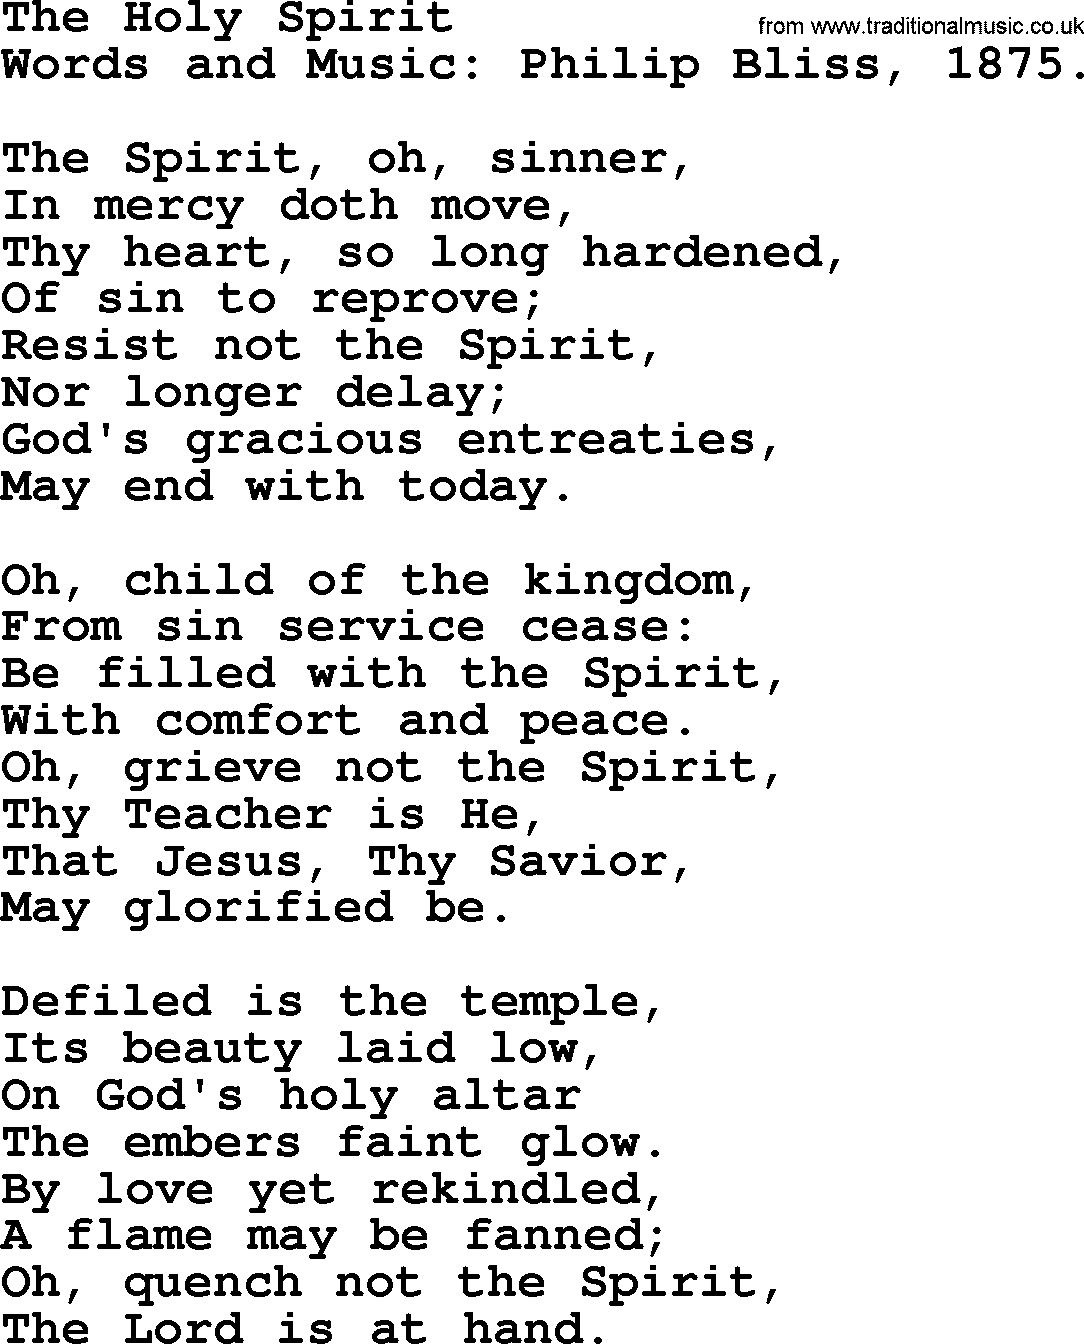 Philip Bliss Song: The Holy Spirit, lyrics